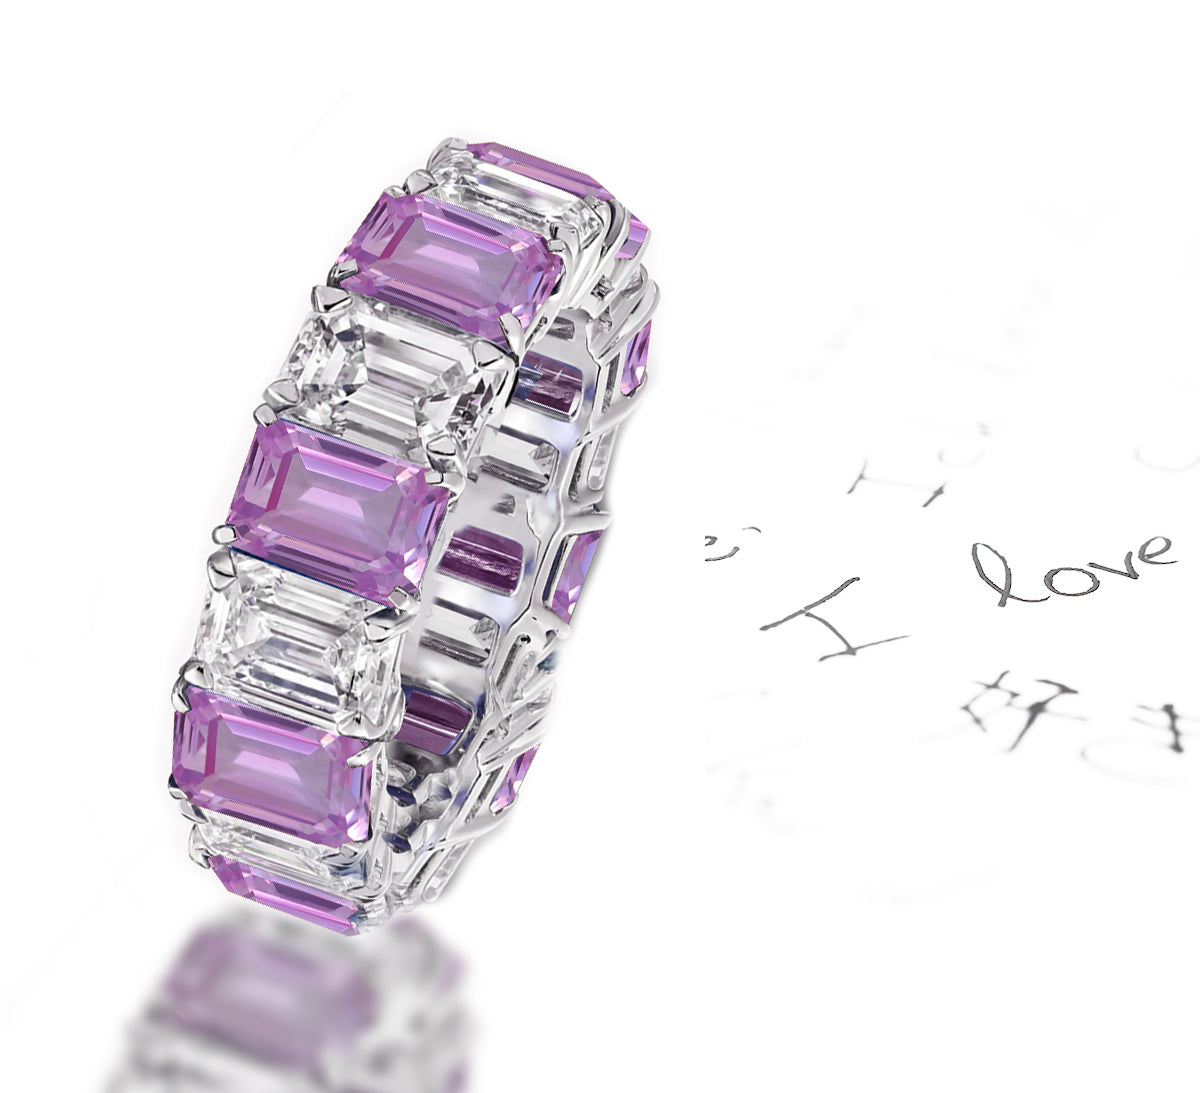 174 custom elegant stackable alternating emerald cut blue sapphire and diamond eternity band wedding anniversary ring